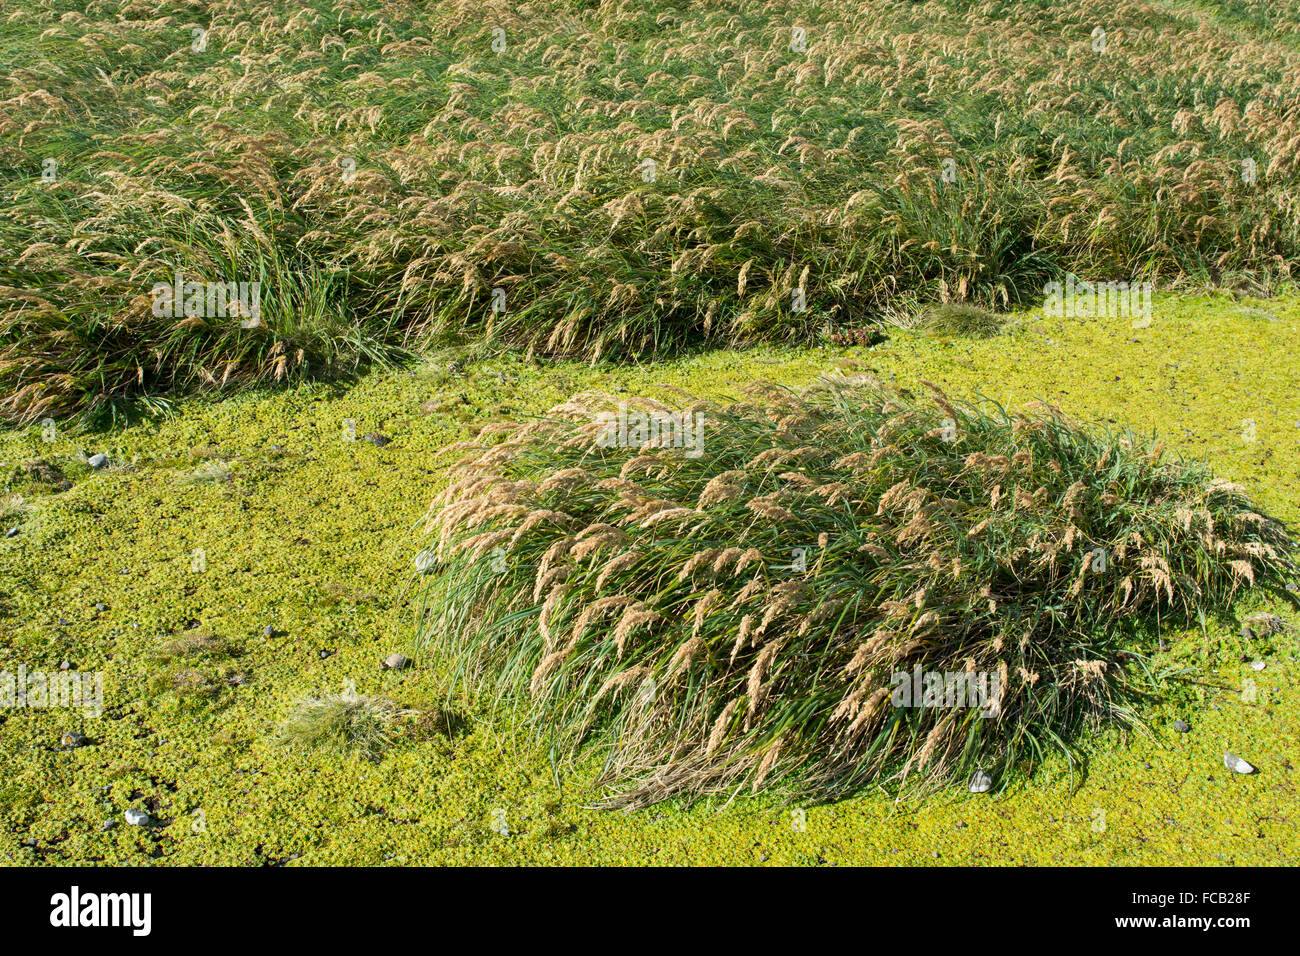 Neuseeland, Auckland-Inseln, unbewohnte Inselgruppe im Südpazifik, Enderby Insel. Tussac Grass (Poa Litorosa). Stockfoto